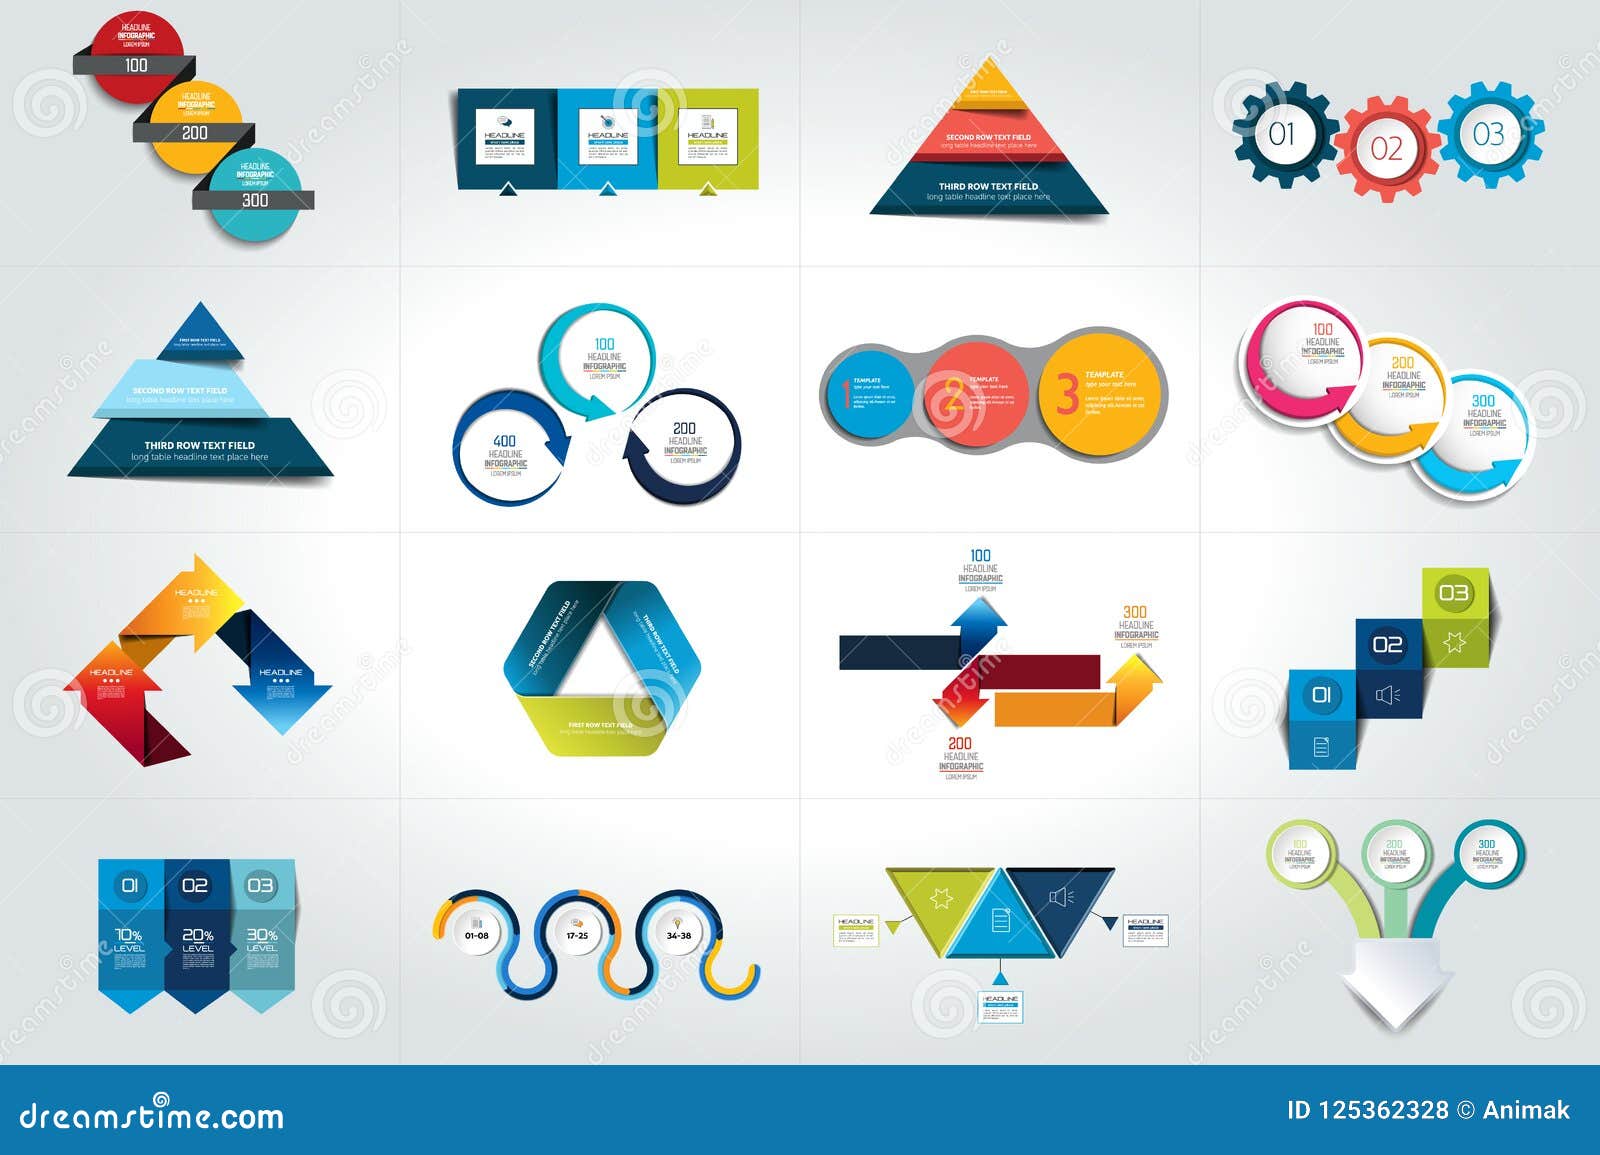 mega set of 3 steps infographic templates, diagrams, graph, presentations, chart